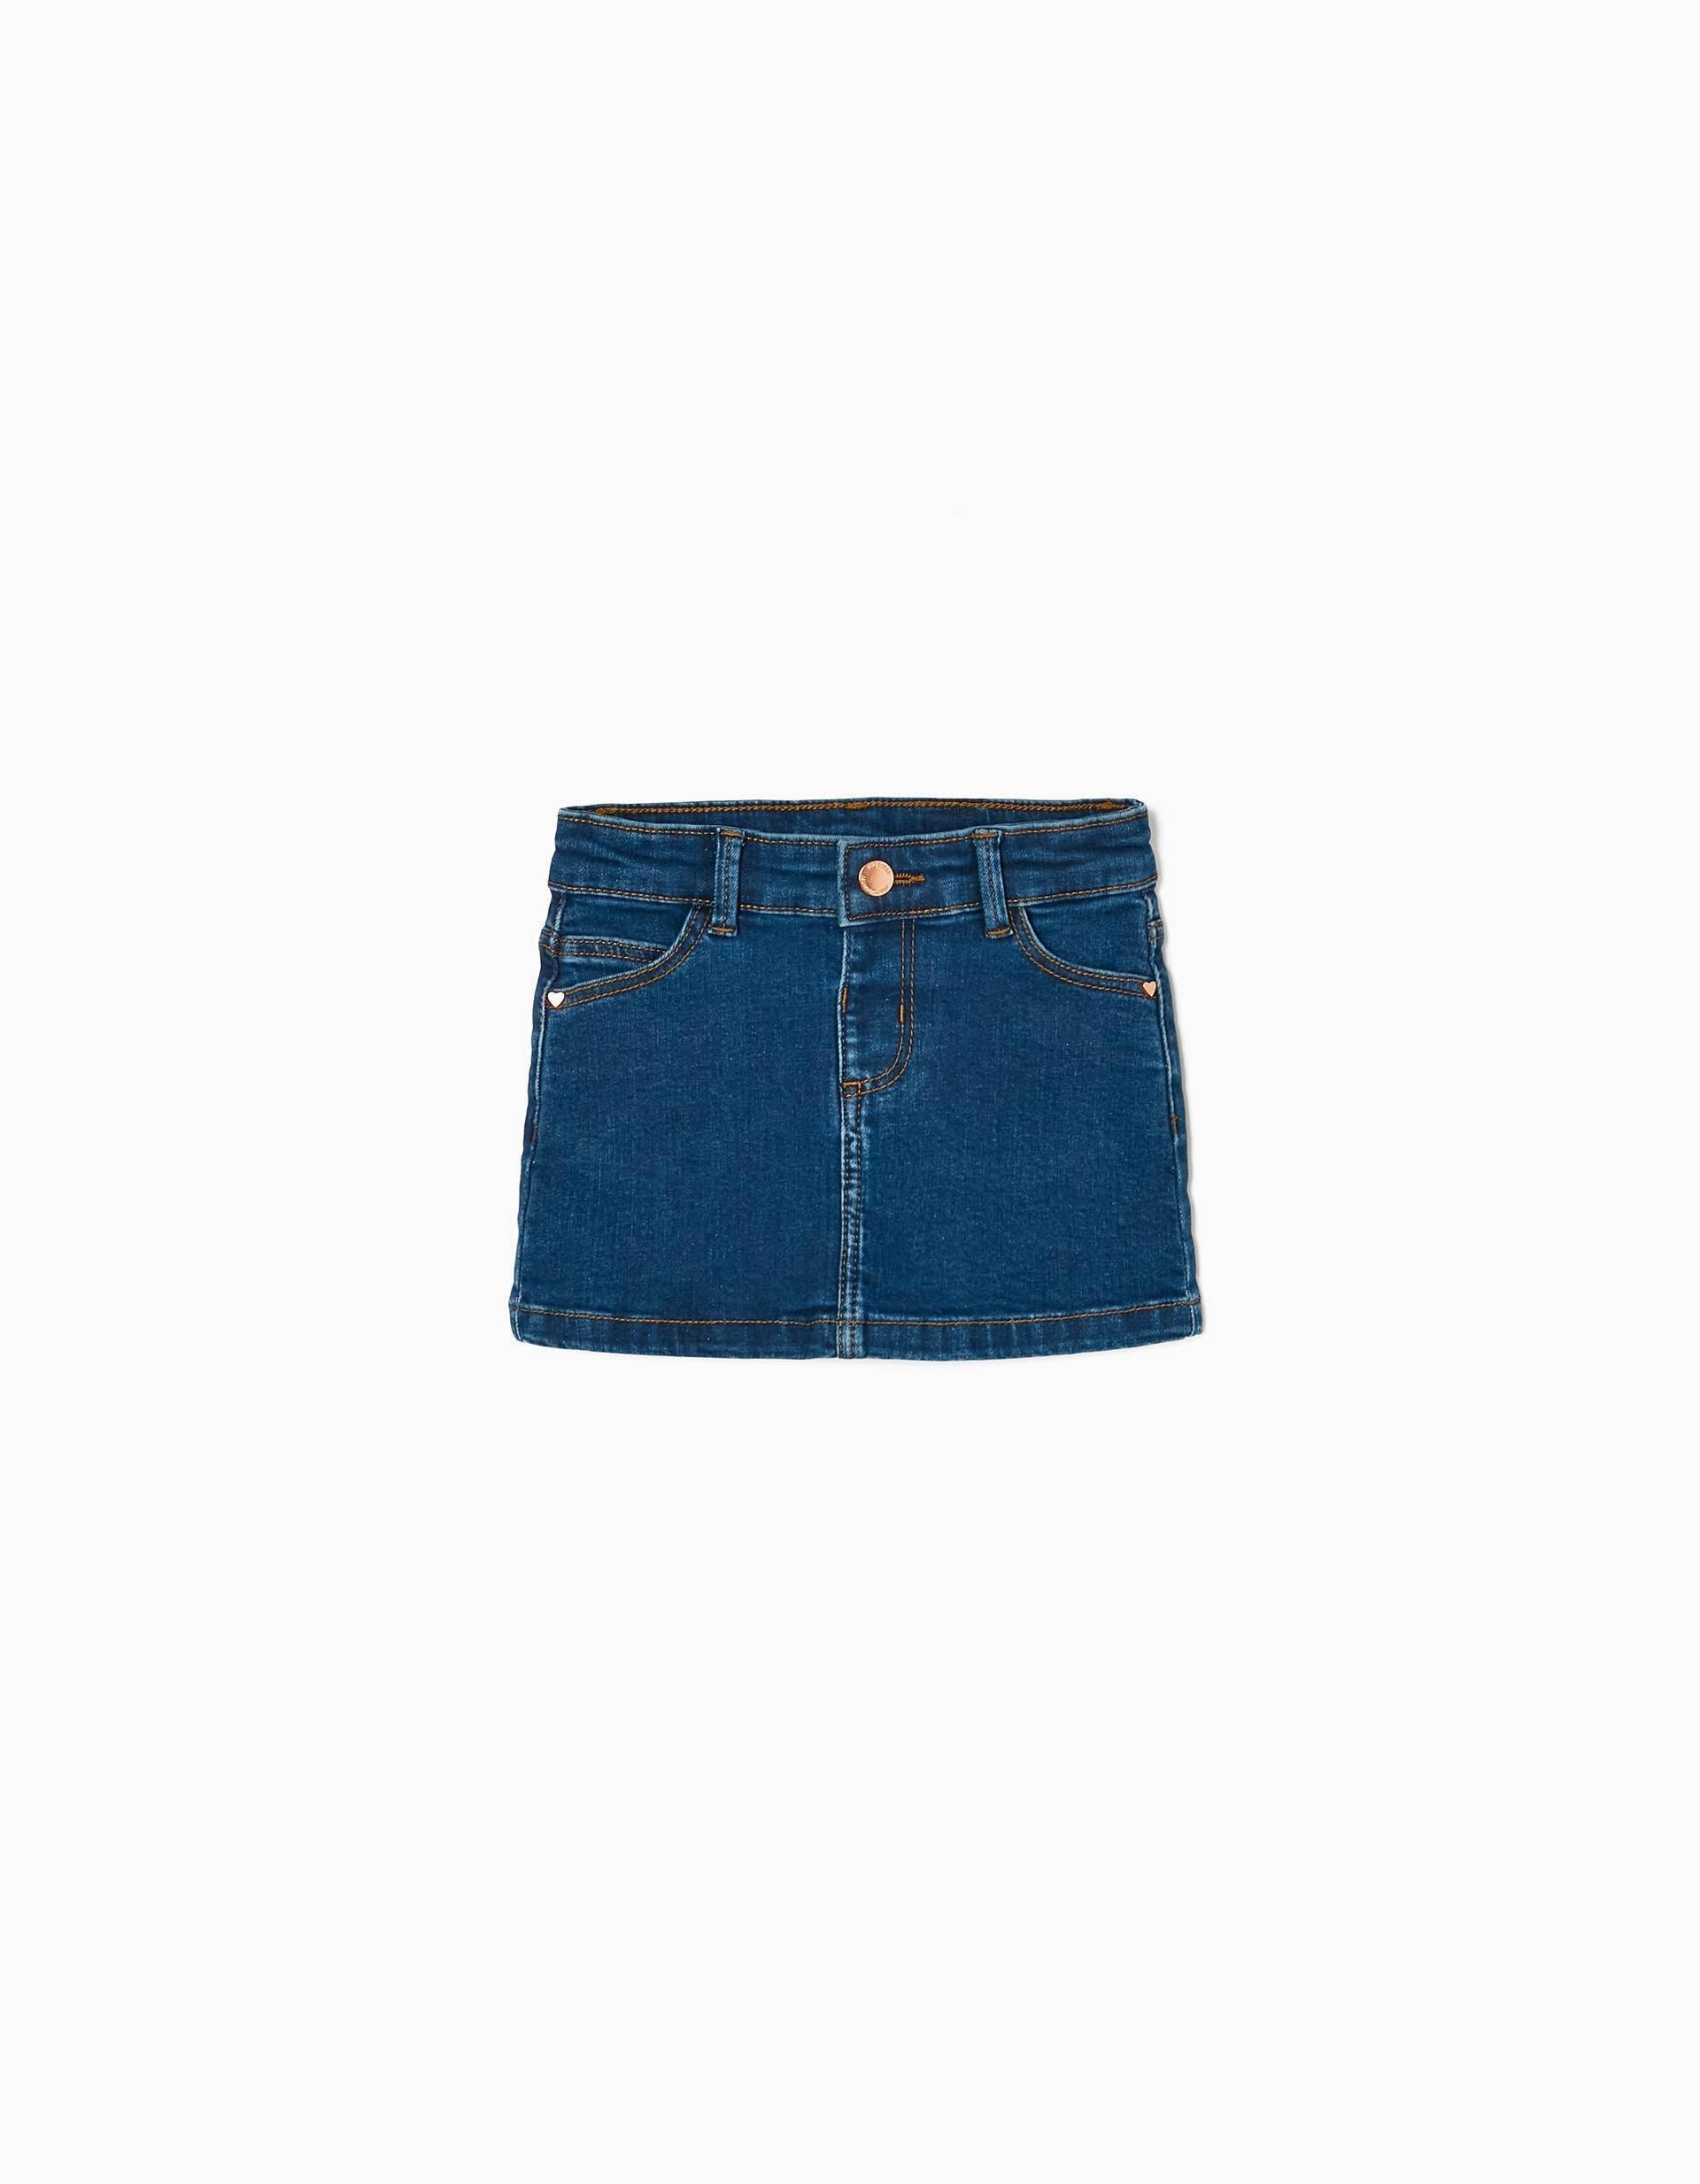 Zippy - Blue Cotton Denim Mini-Skirt, Baby Girls